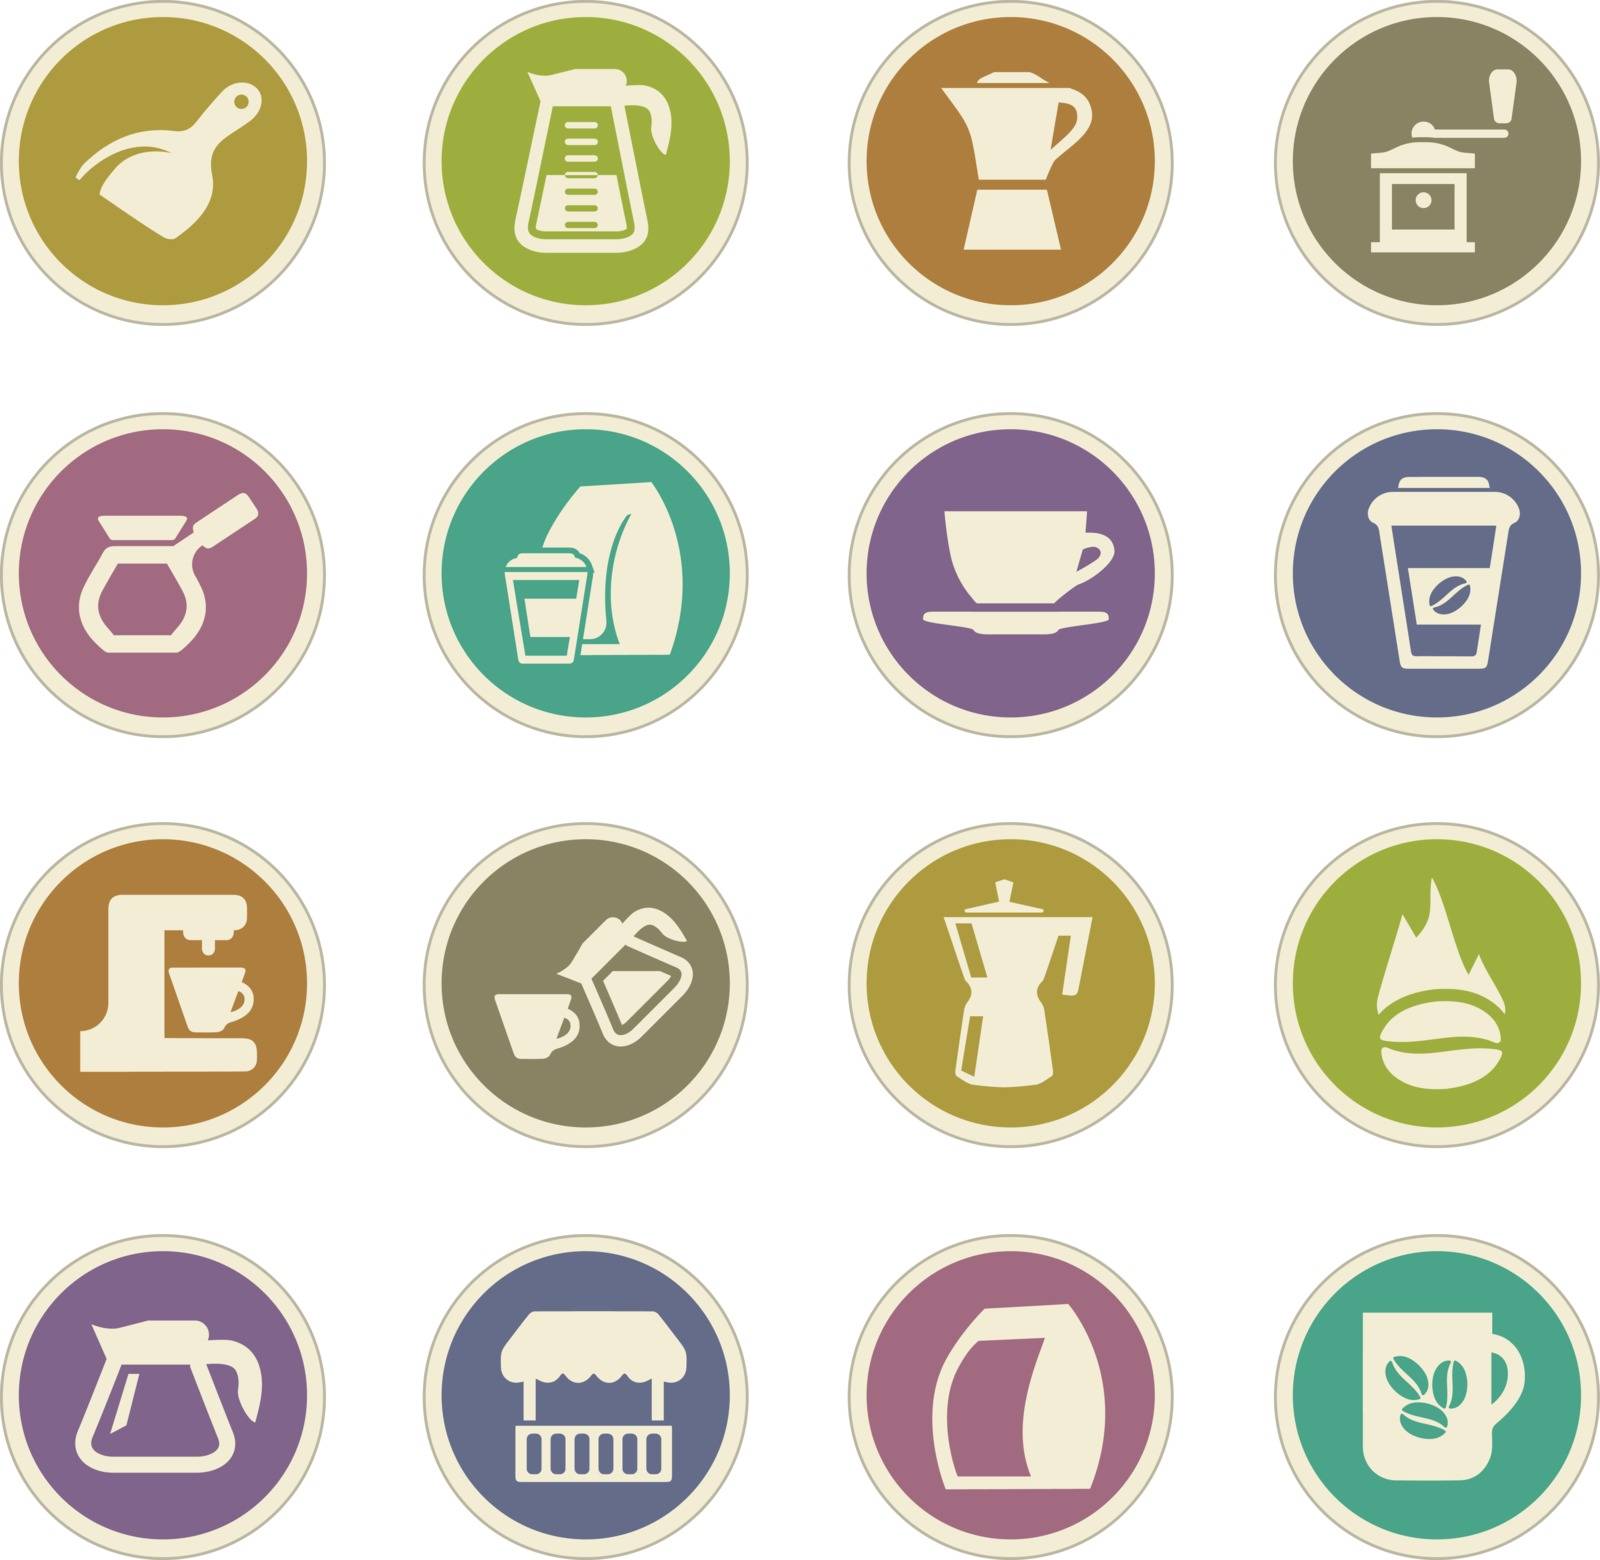 Coffee icons set by ayax